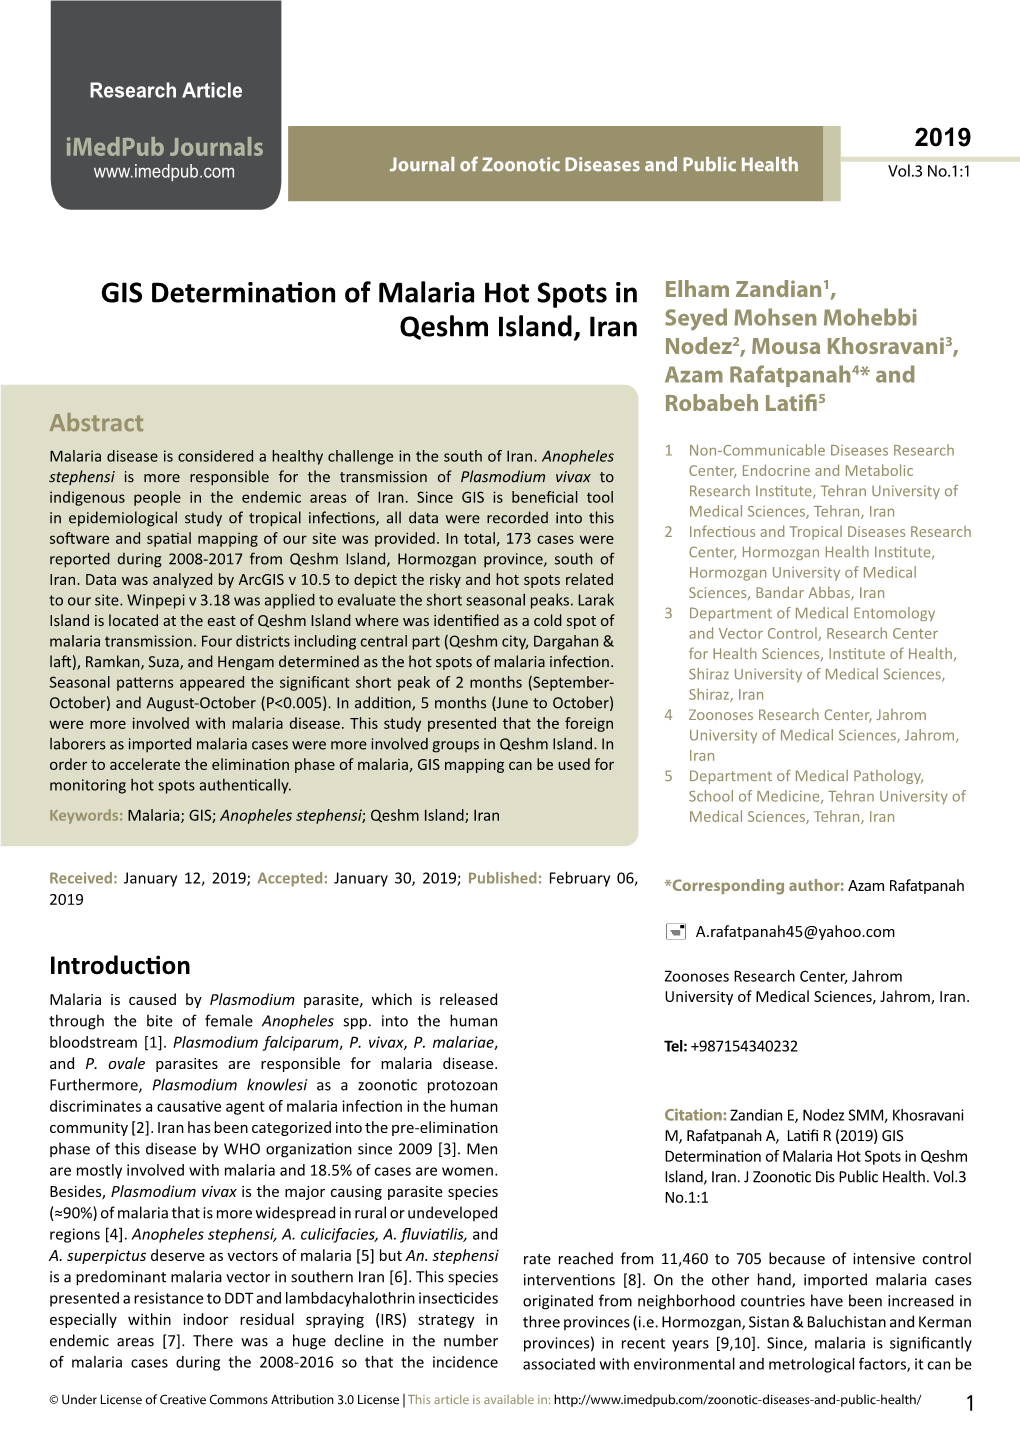 GIS Determination of Malaria Hot Spots in Qeshm Island, Iran